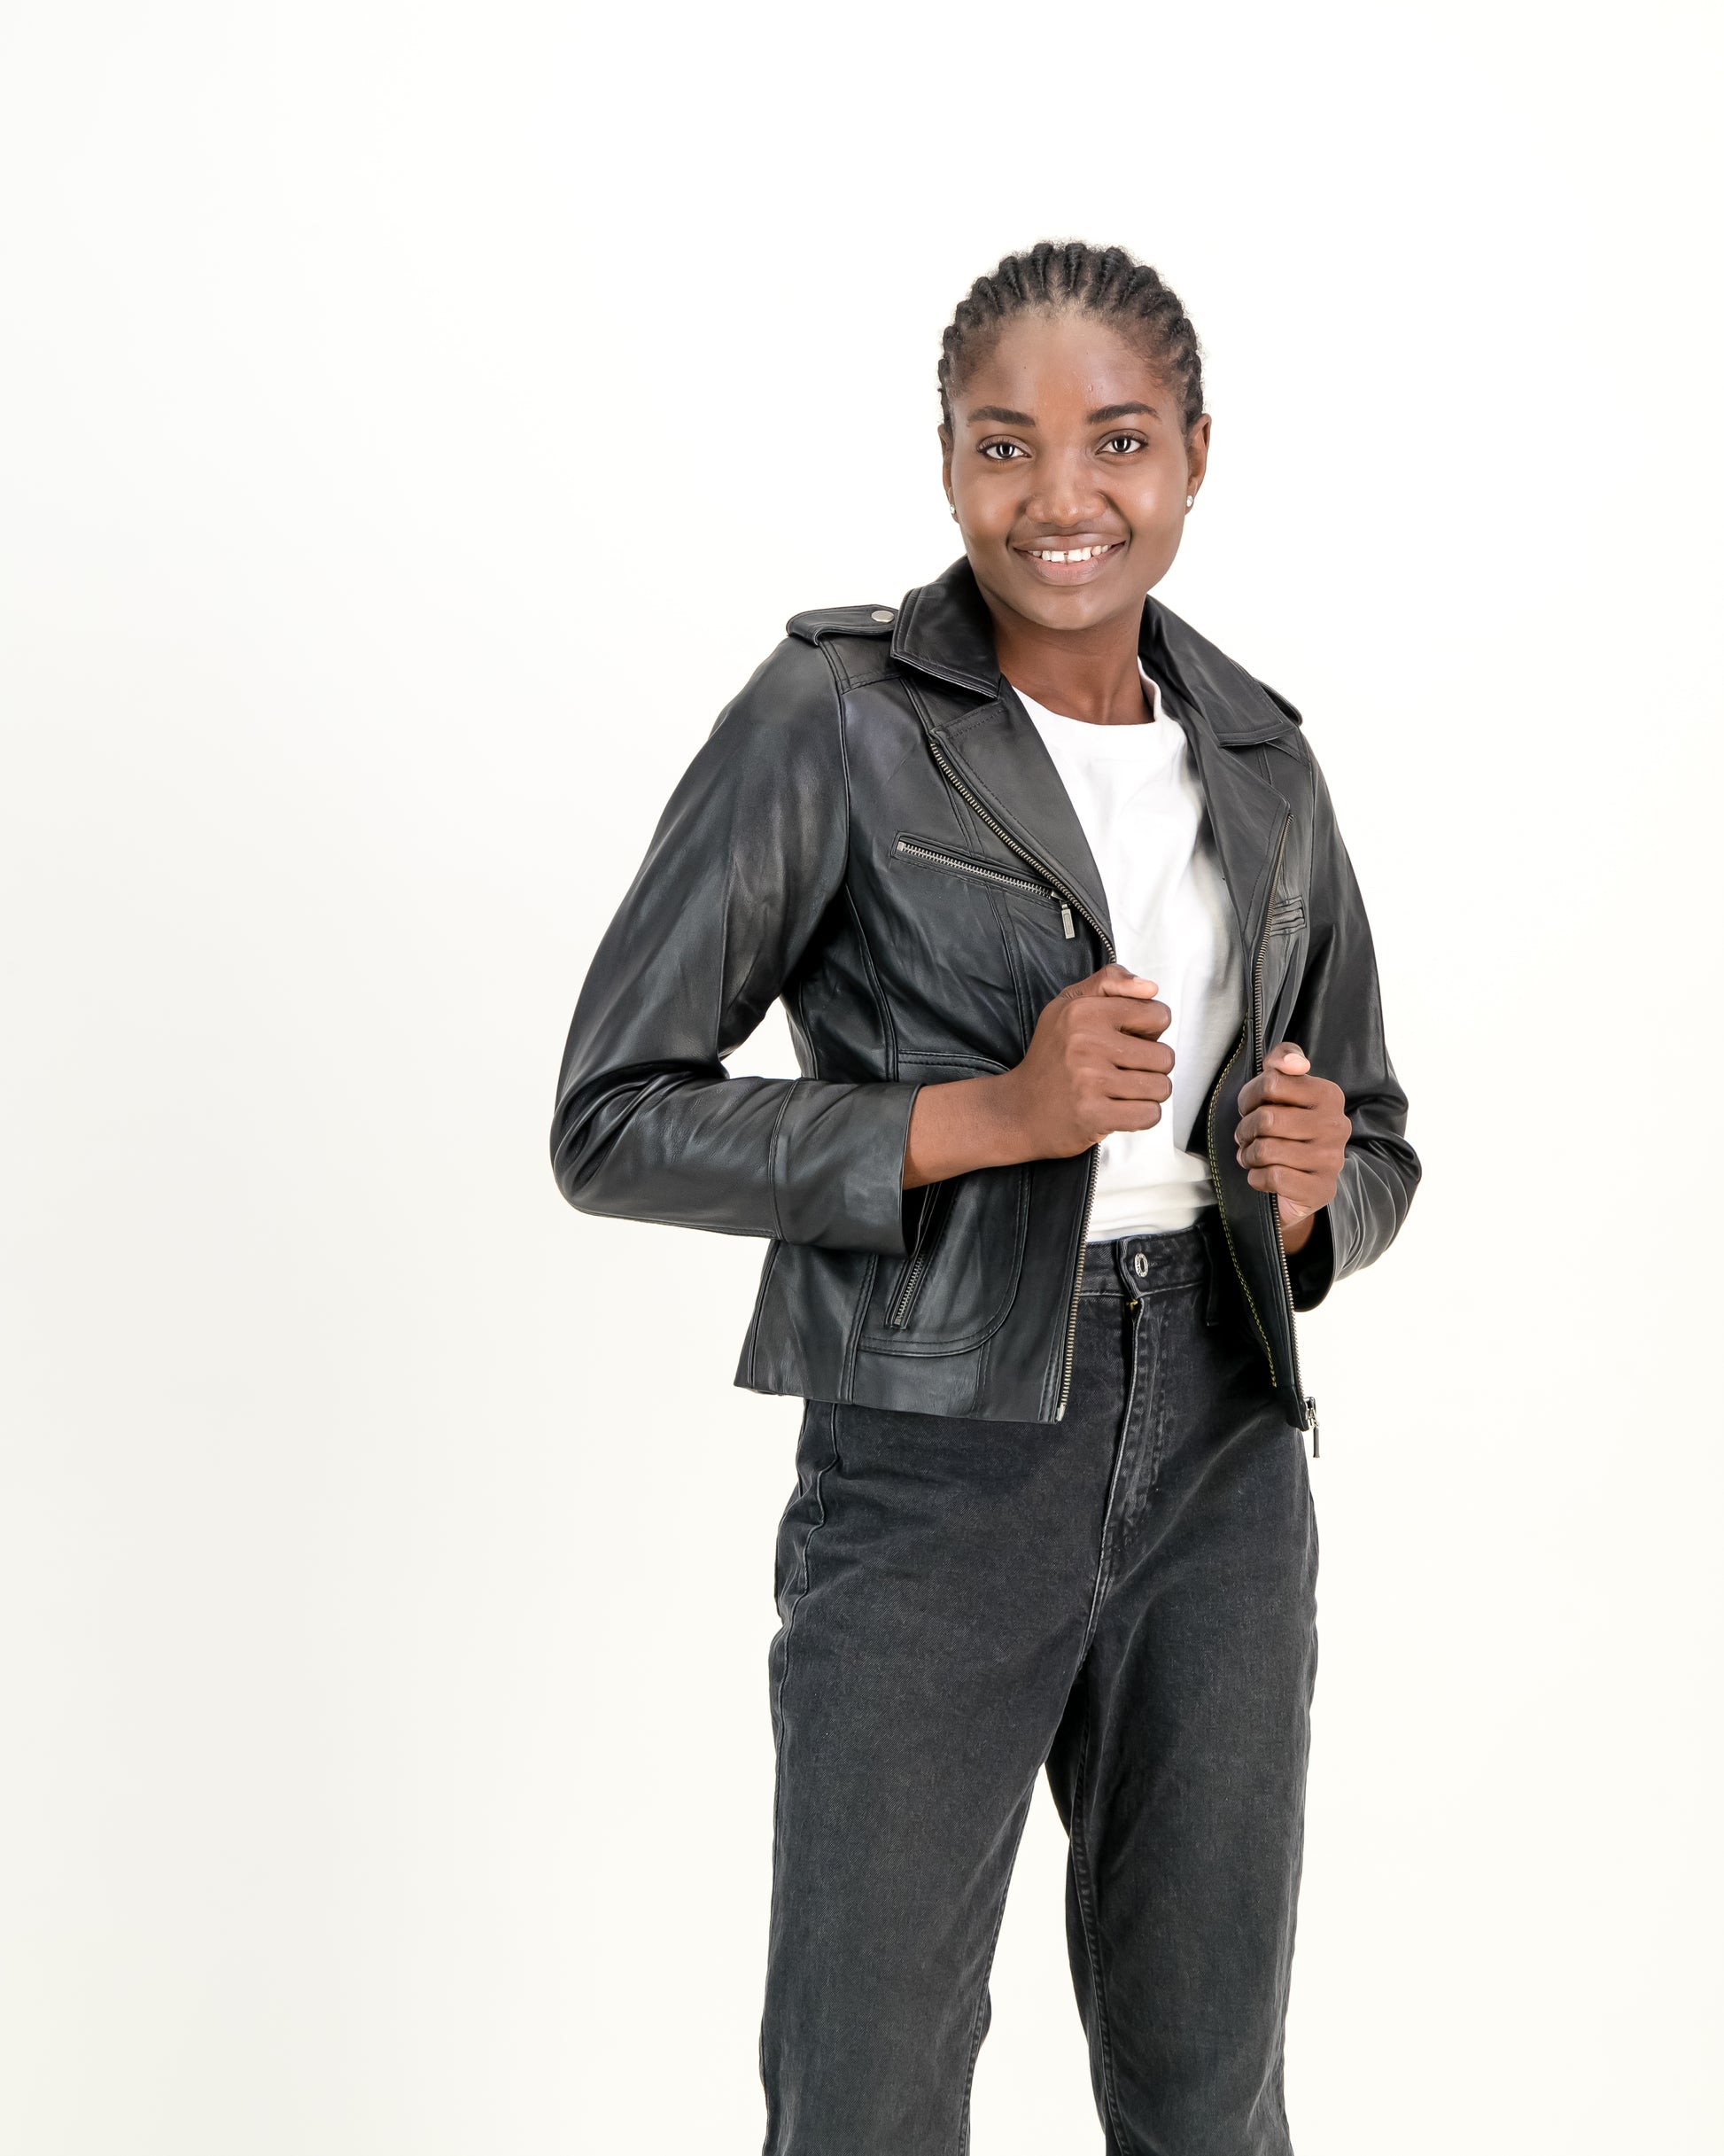 Women's Lady Jane Black Slim Fit 100% Napa Leather Jacket - Supreme Leather Supreme Leather